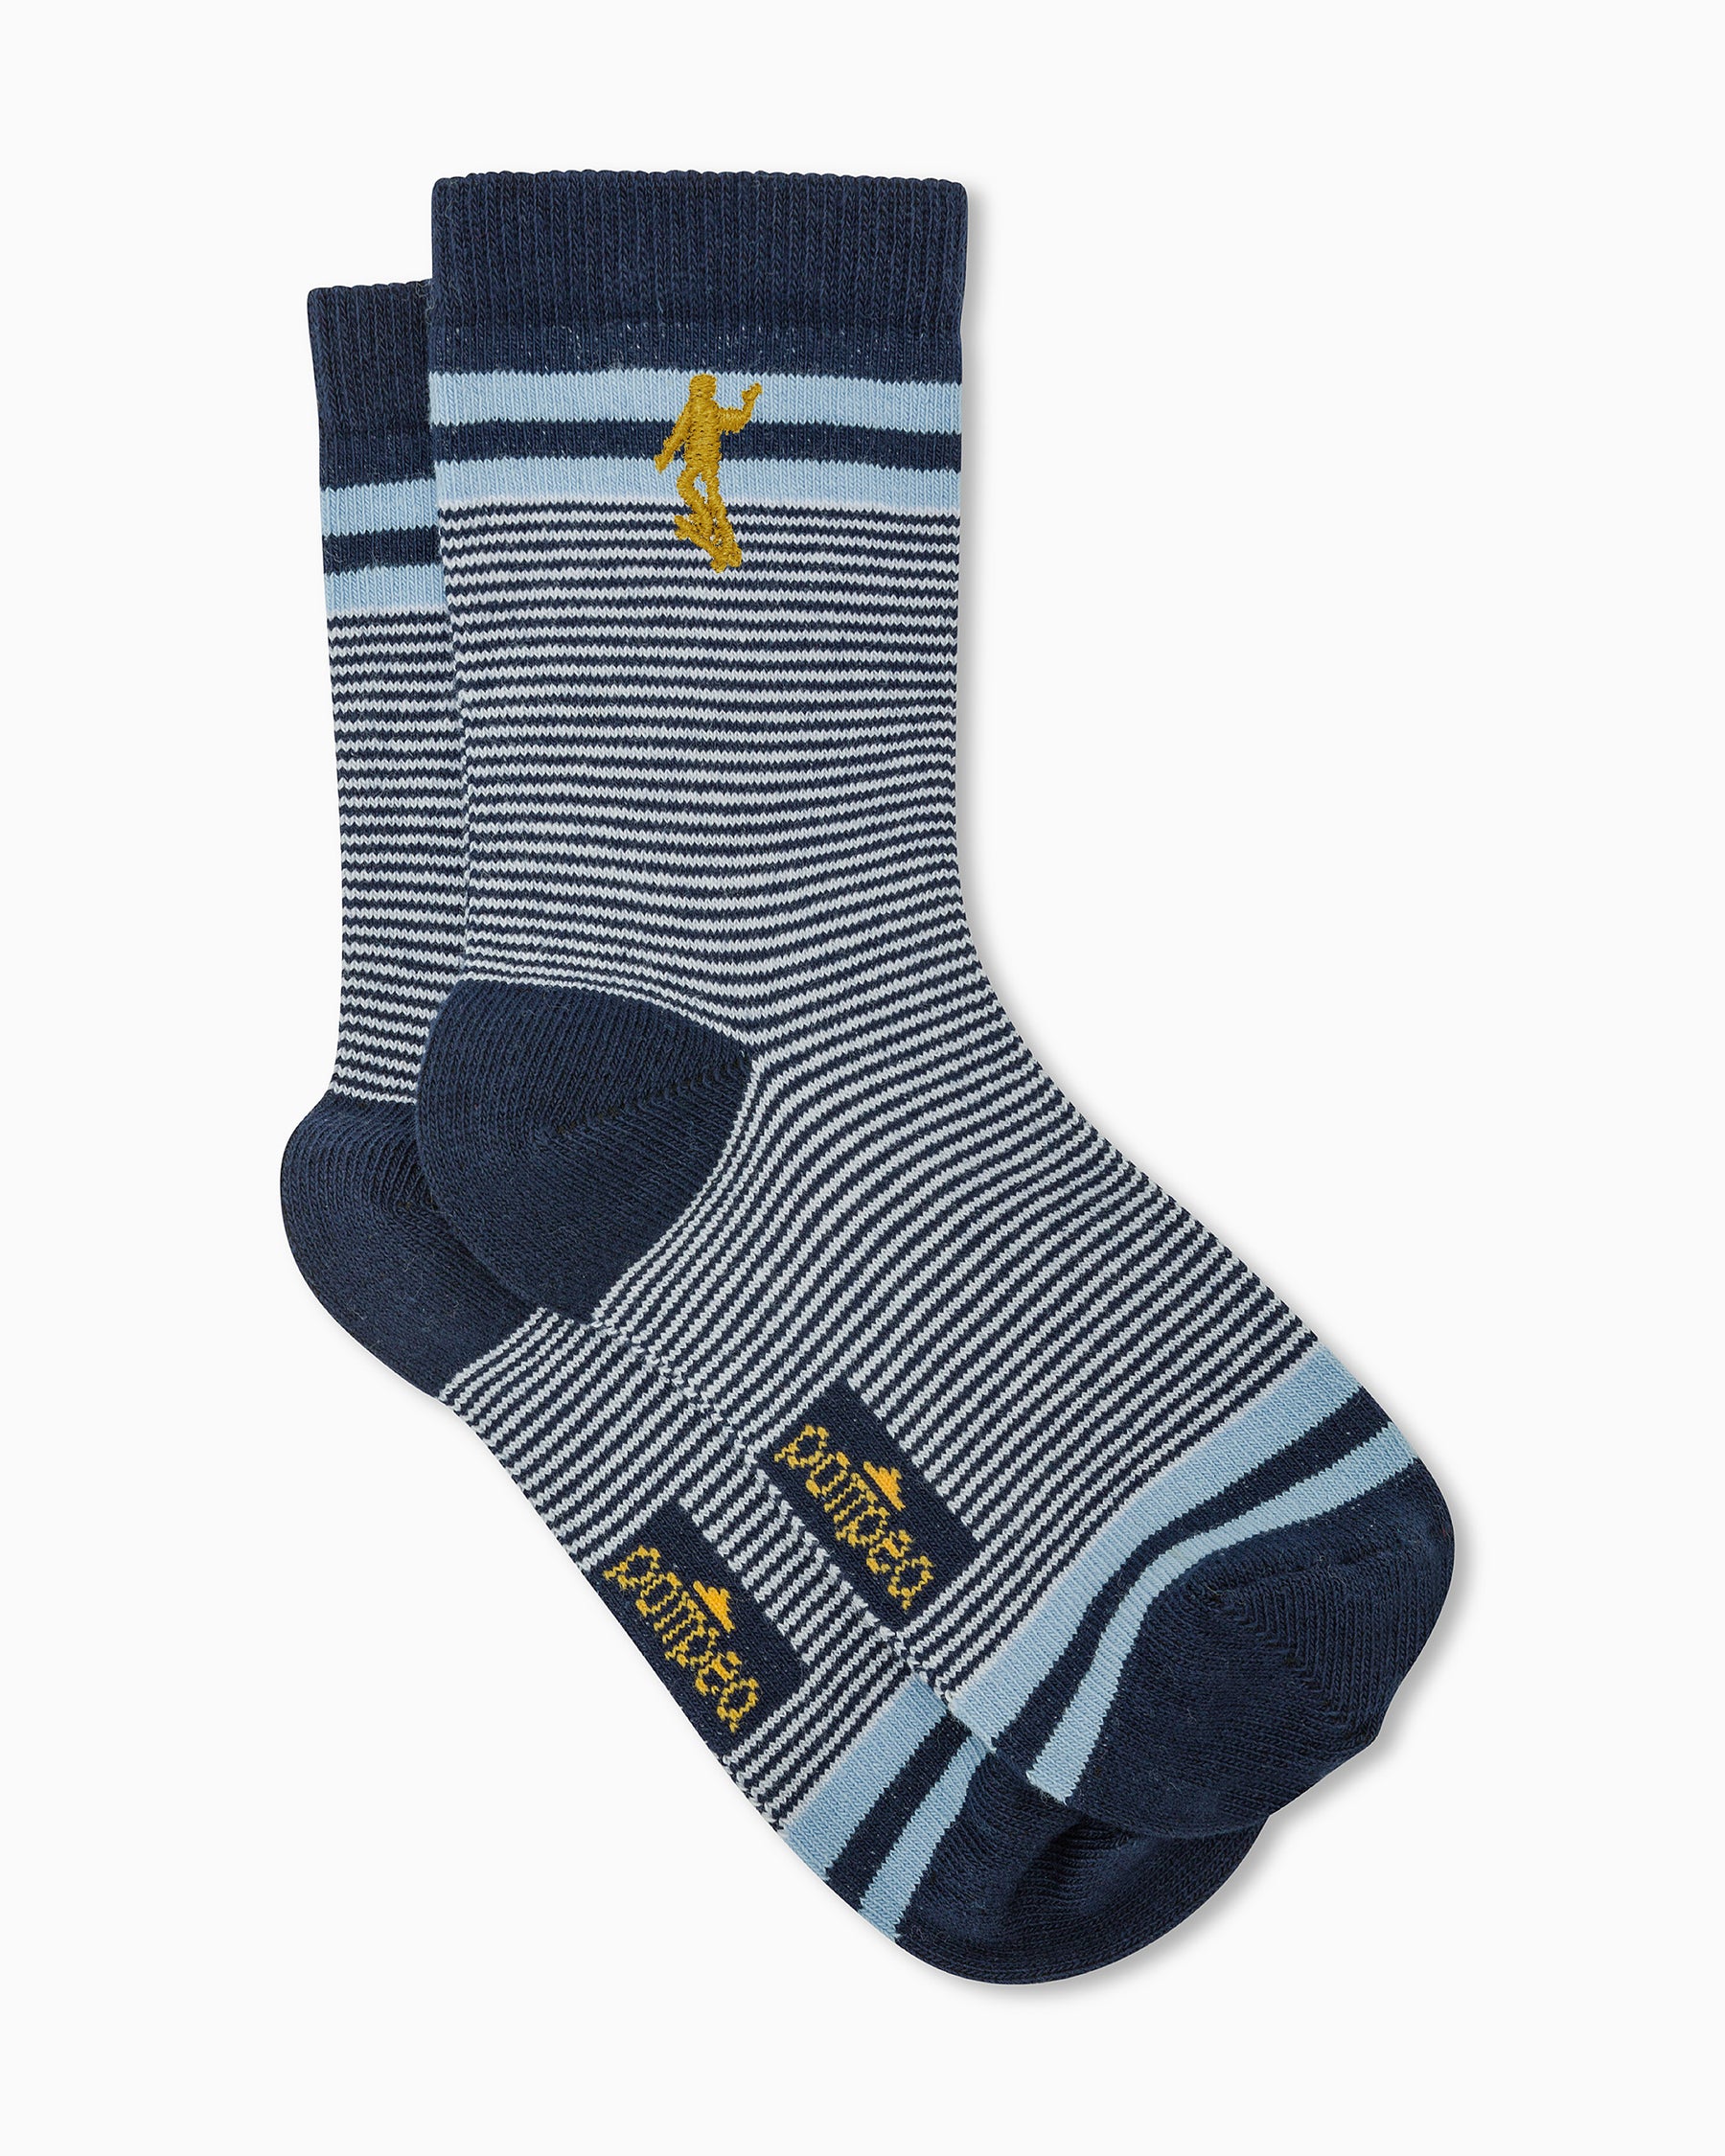 Carlo boys’ sock with striped pattern